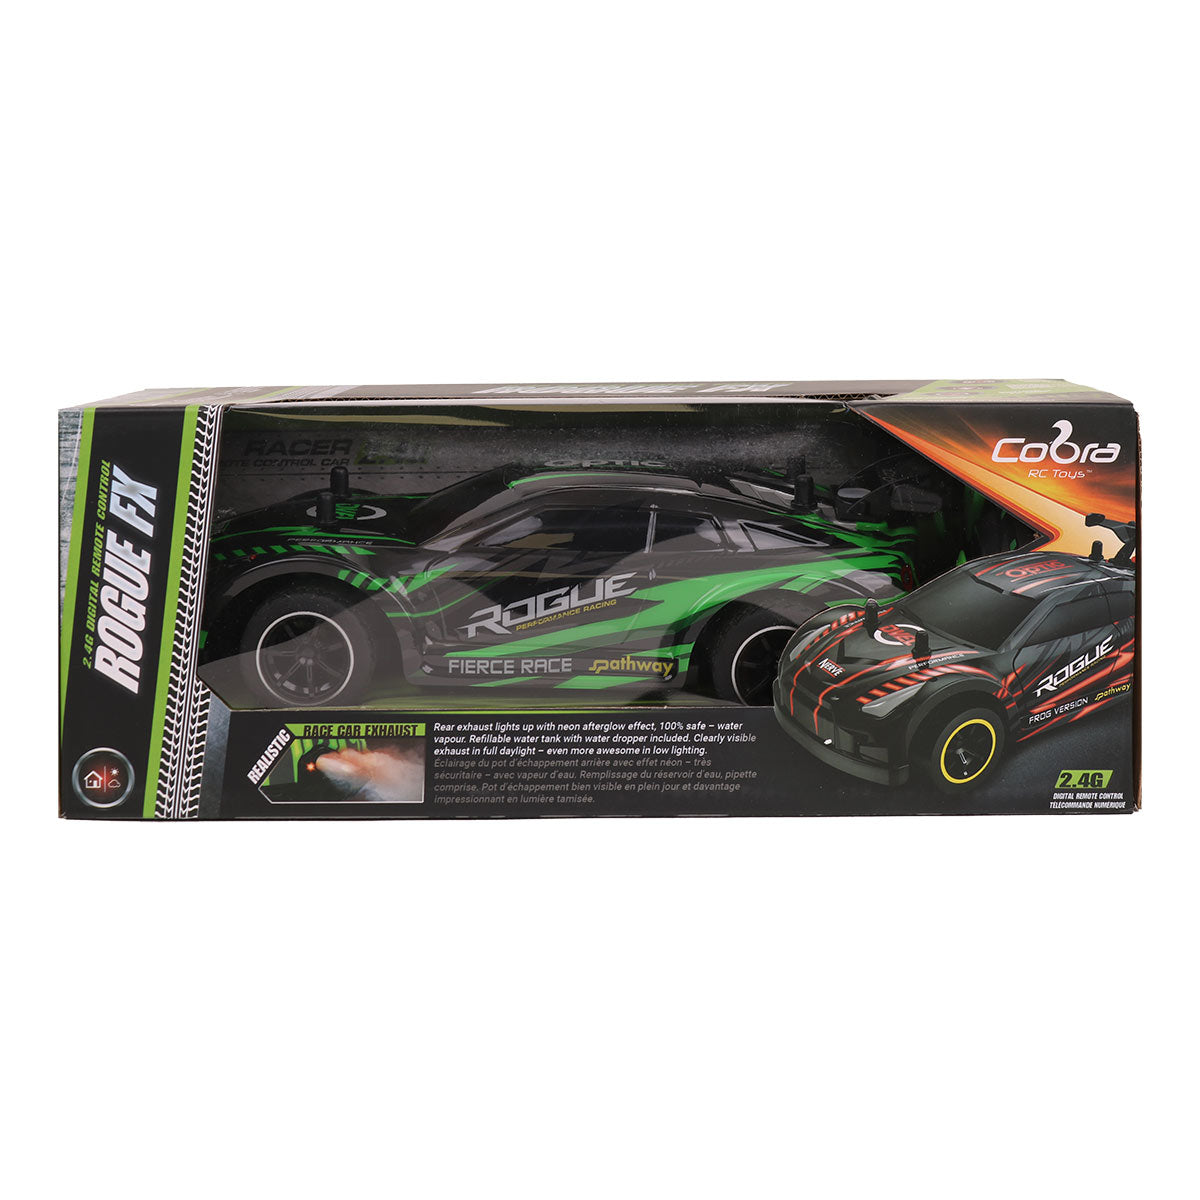 Wholesale Rogue F/X RC Race Cars